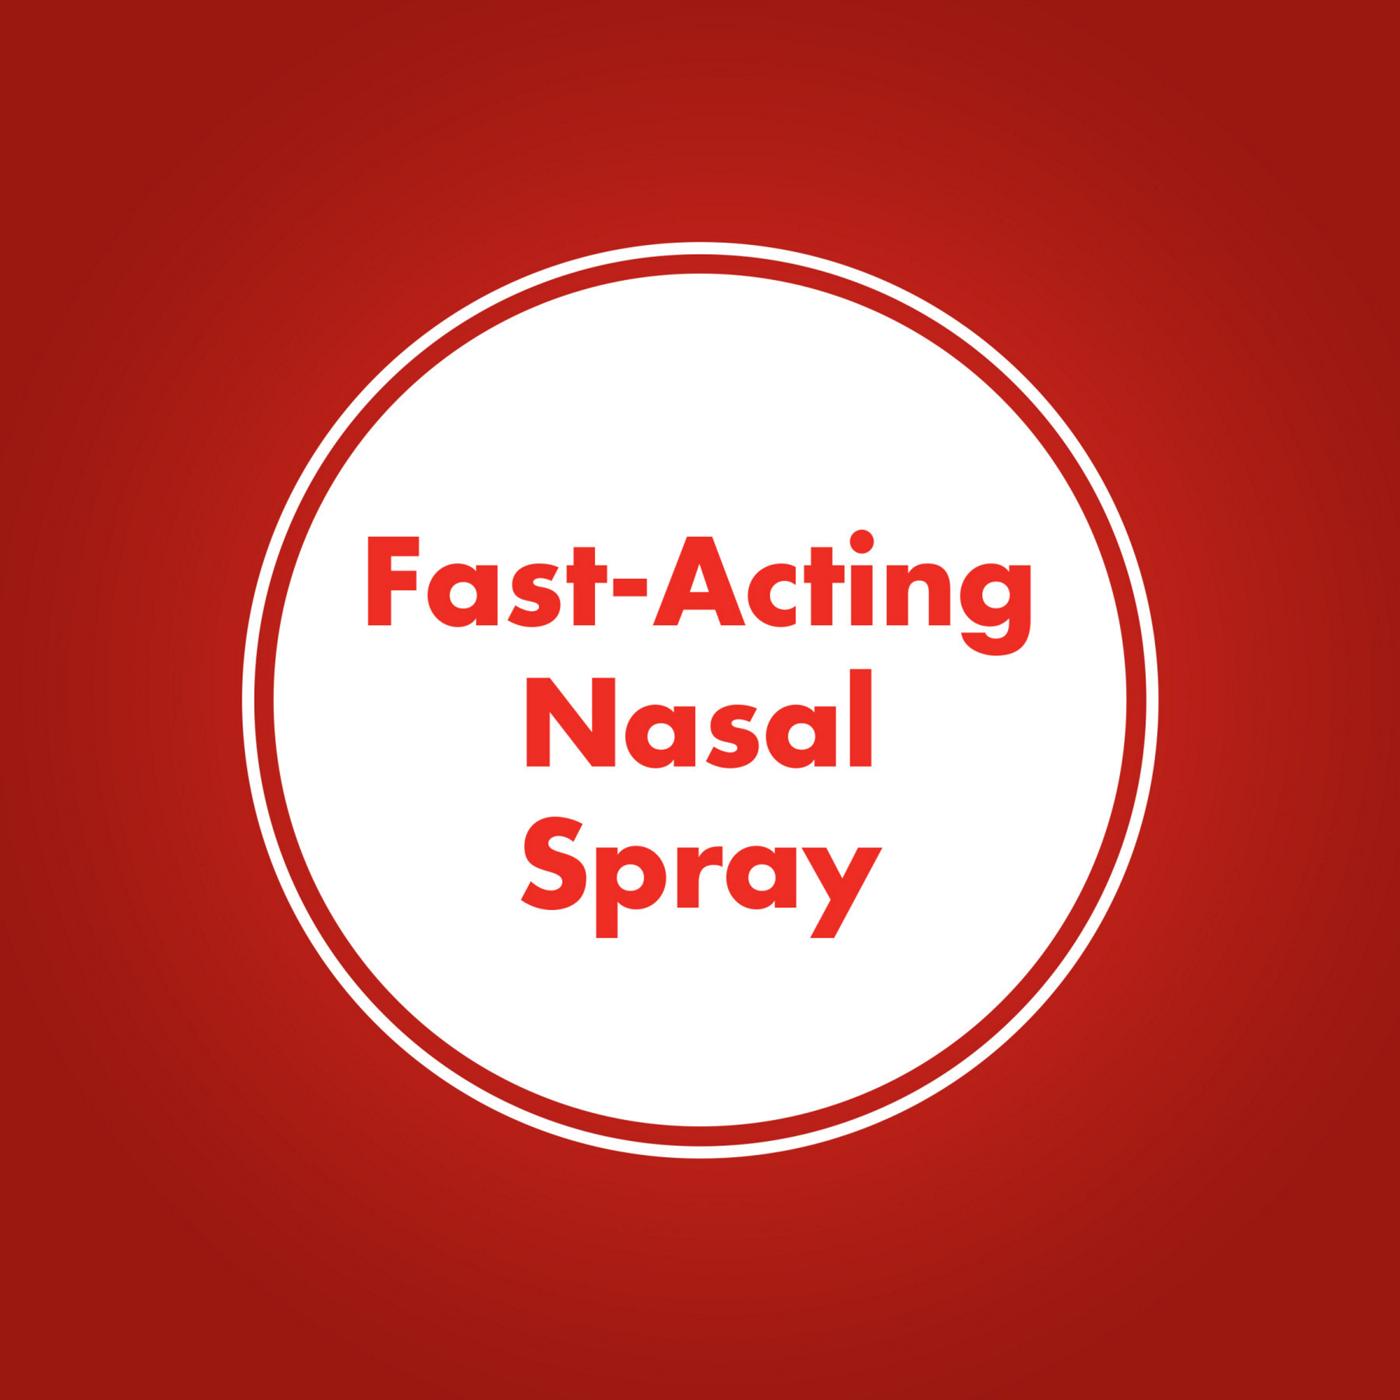 Equate Nasal Four Nasal Spray, Fast Acting Nasal Decongestant, 1 Fl. Oz.